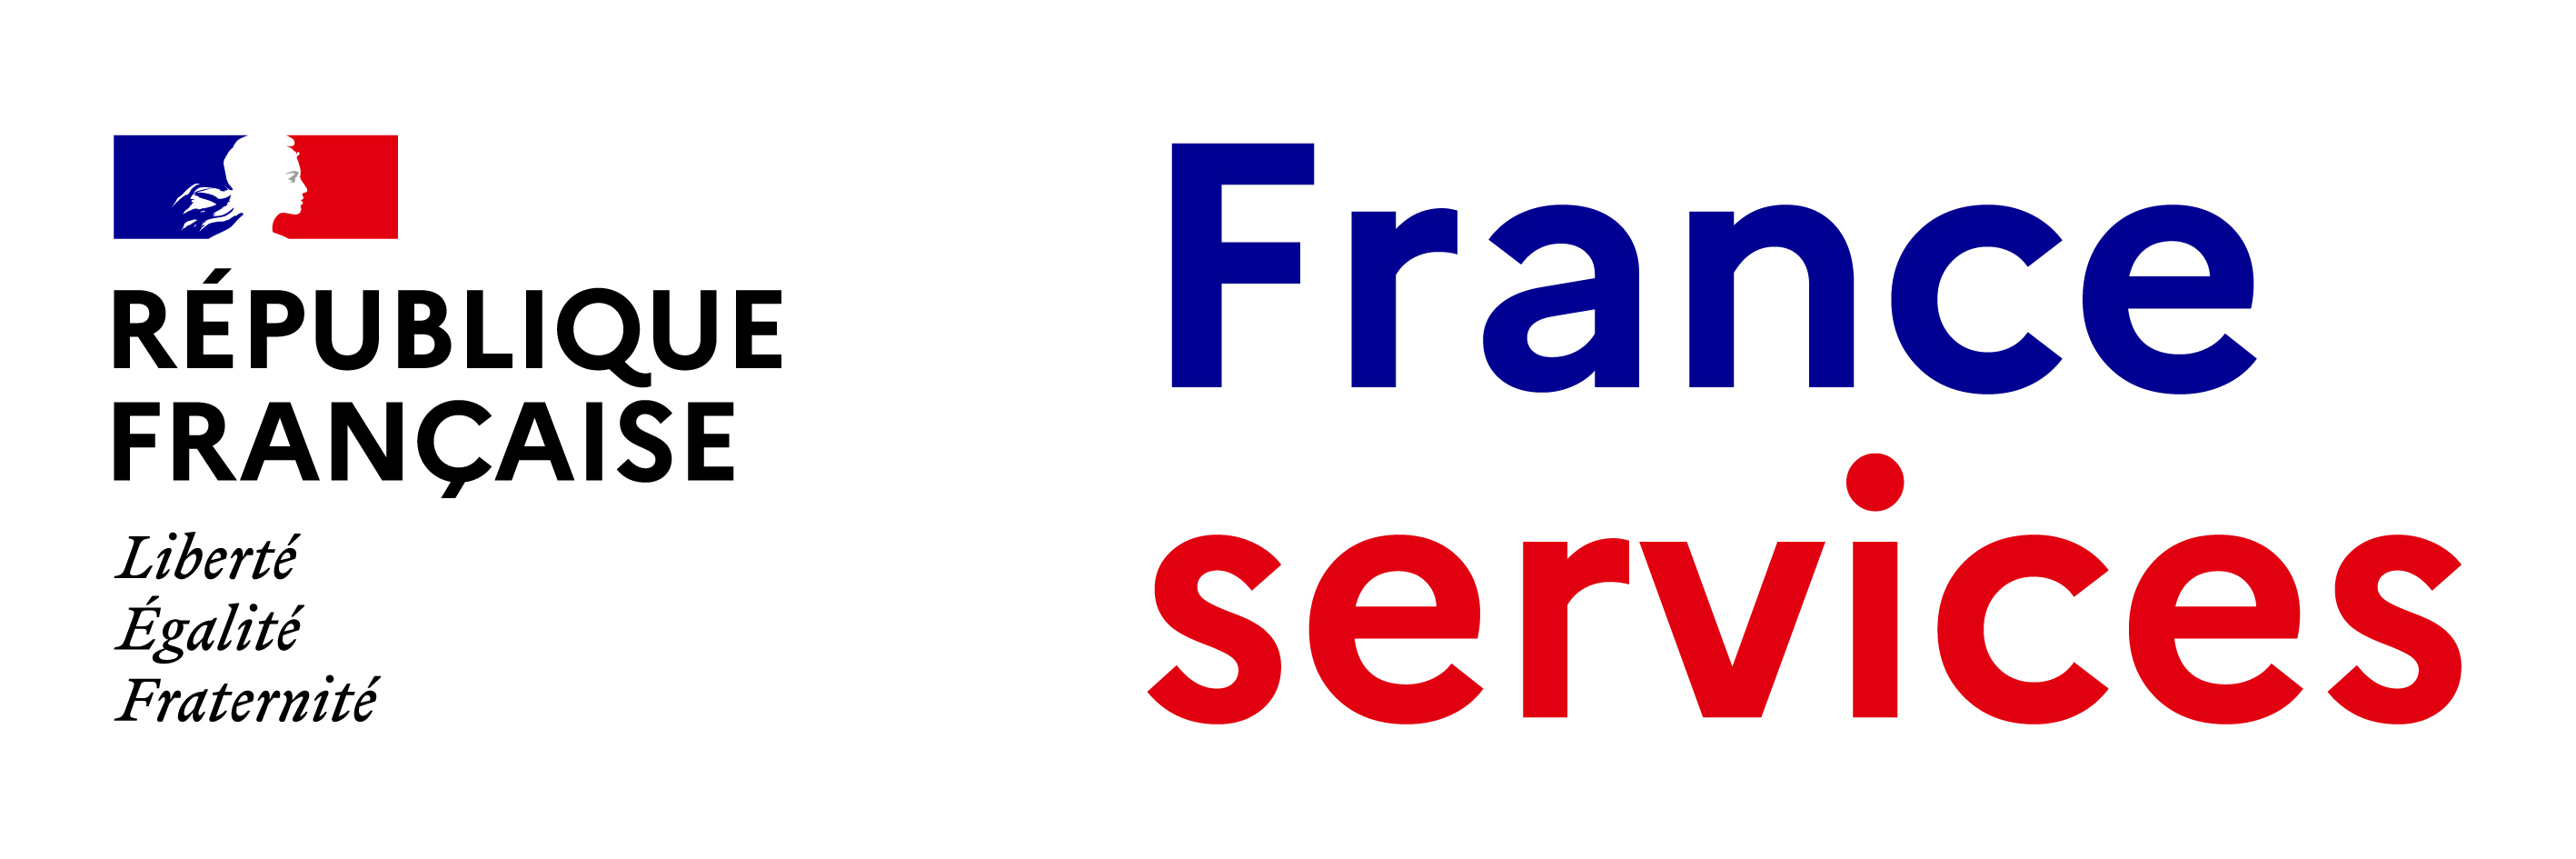 logo_FranceService+RF_horizontal_RVB